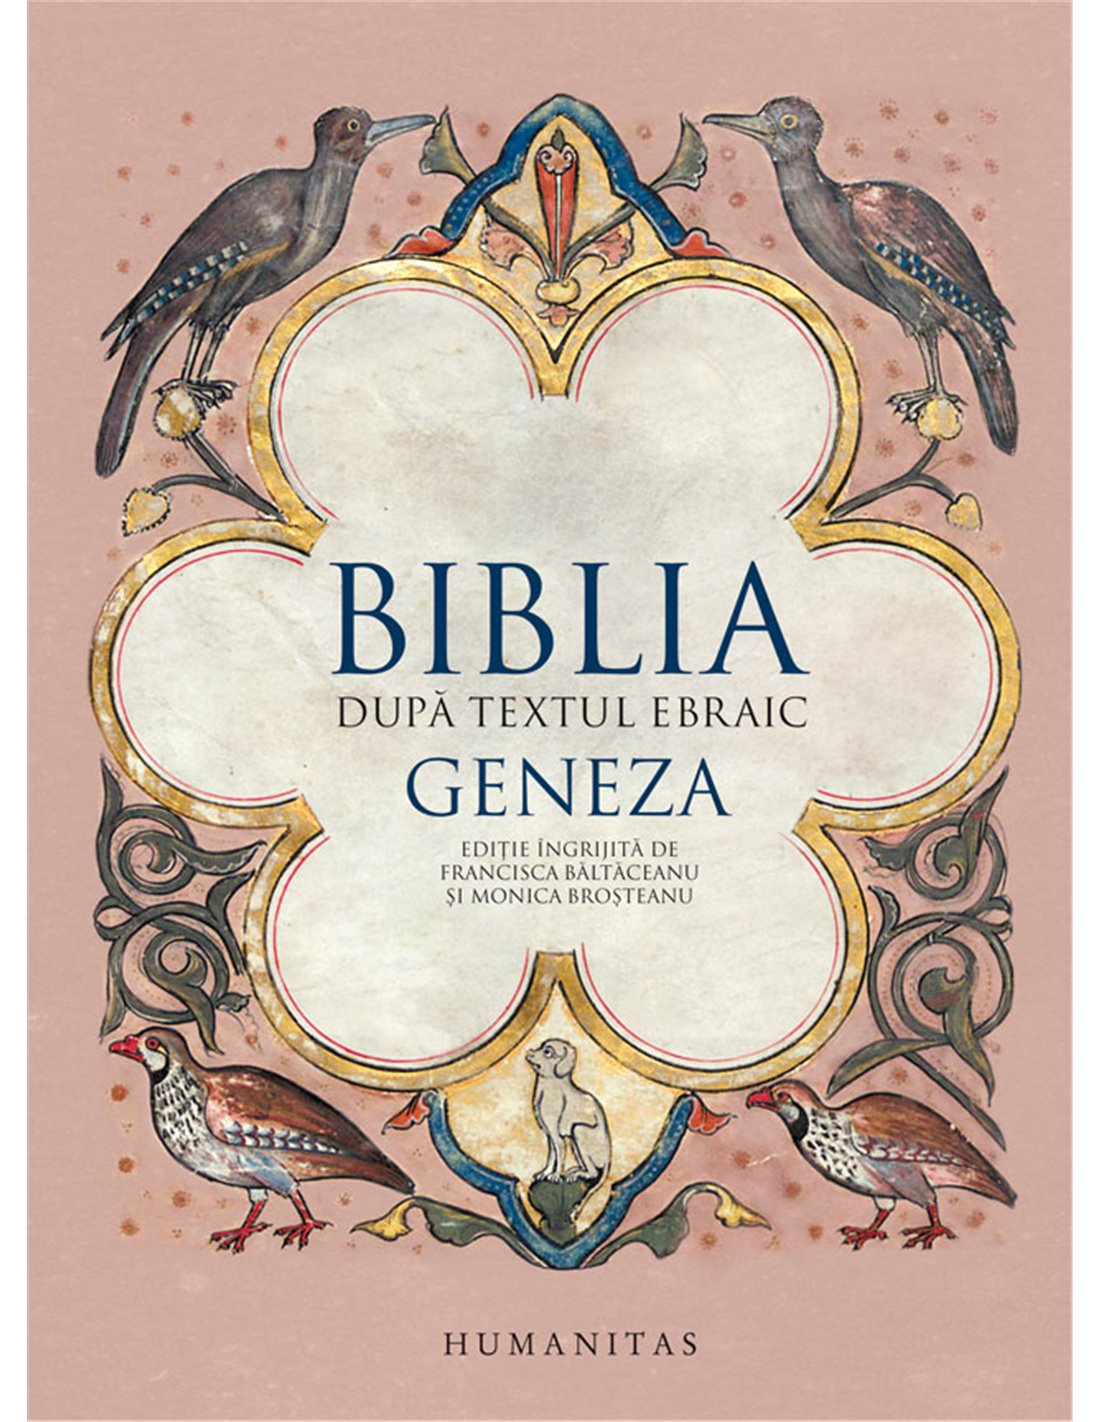 Biblia dupa textul ebraic. Geneza  (Editura Humanitas)